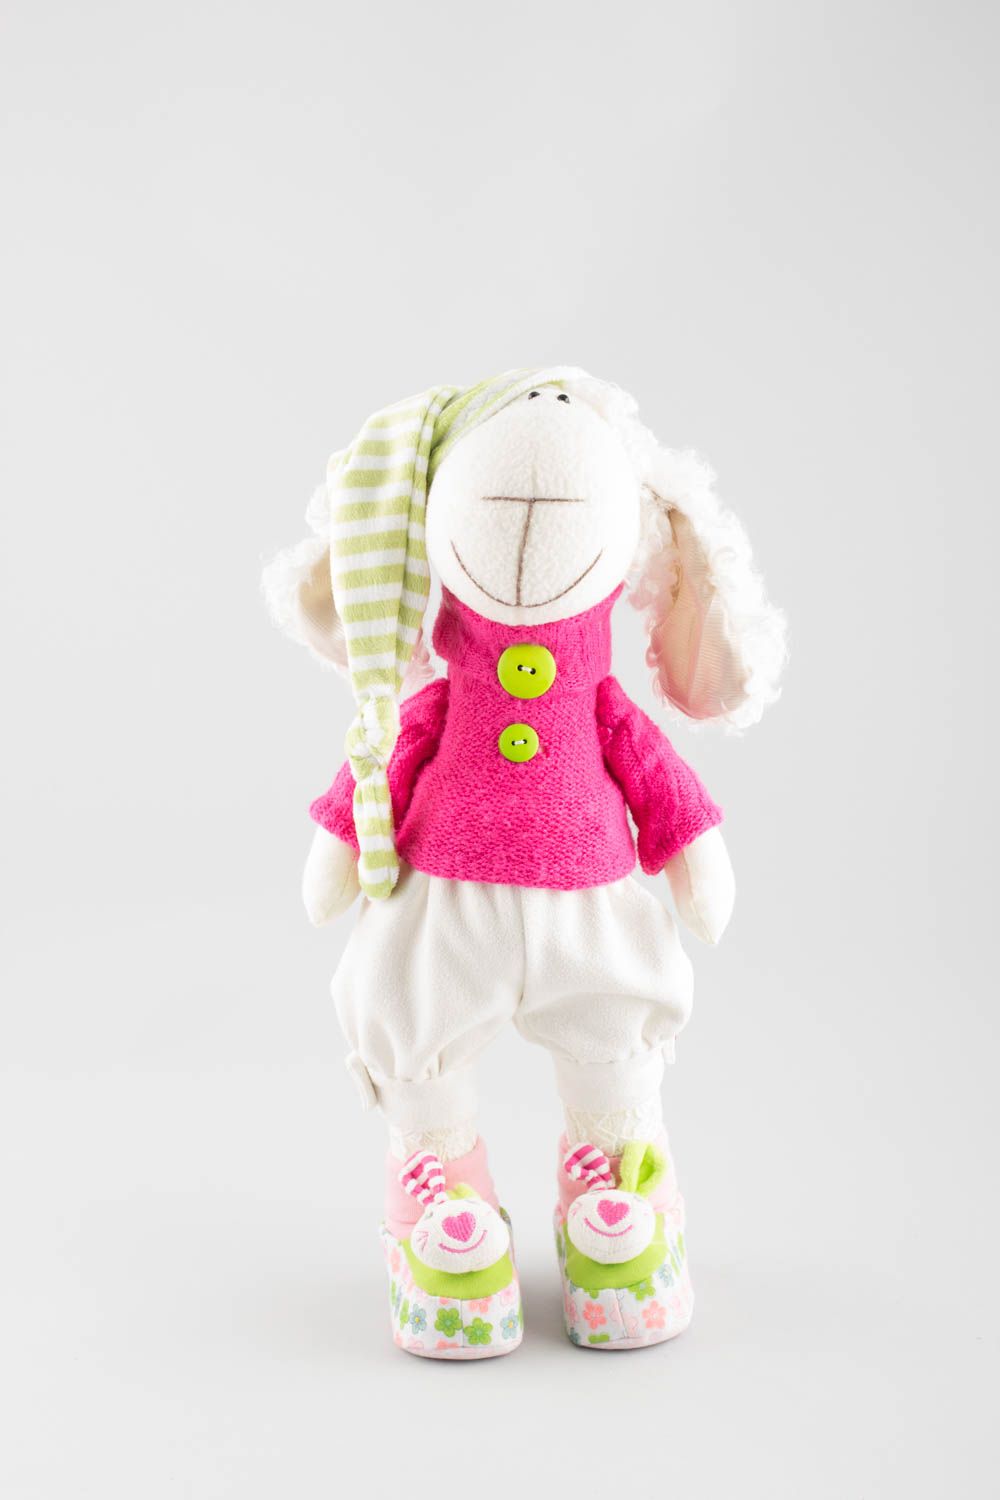 Handmade decorative fabric beautiful toy sheep collectible interior doll photo 2